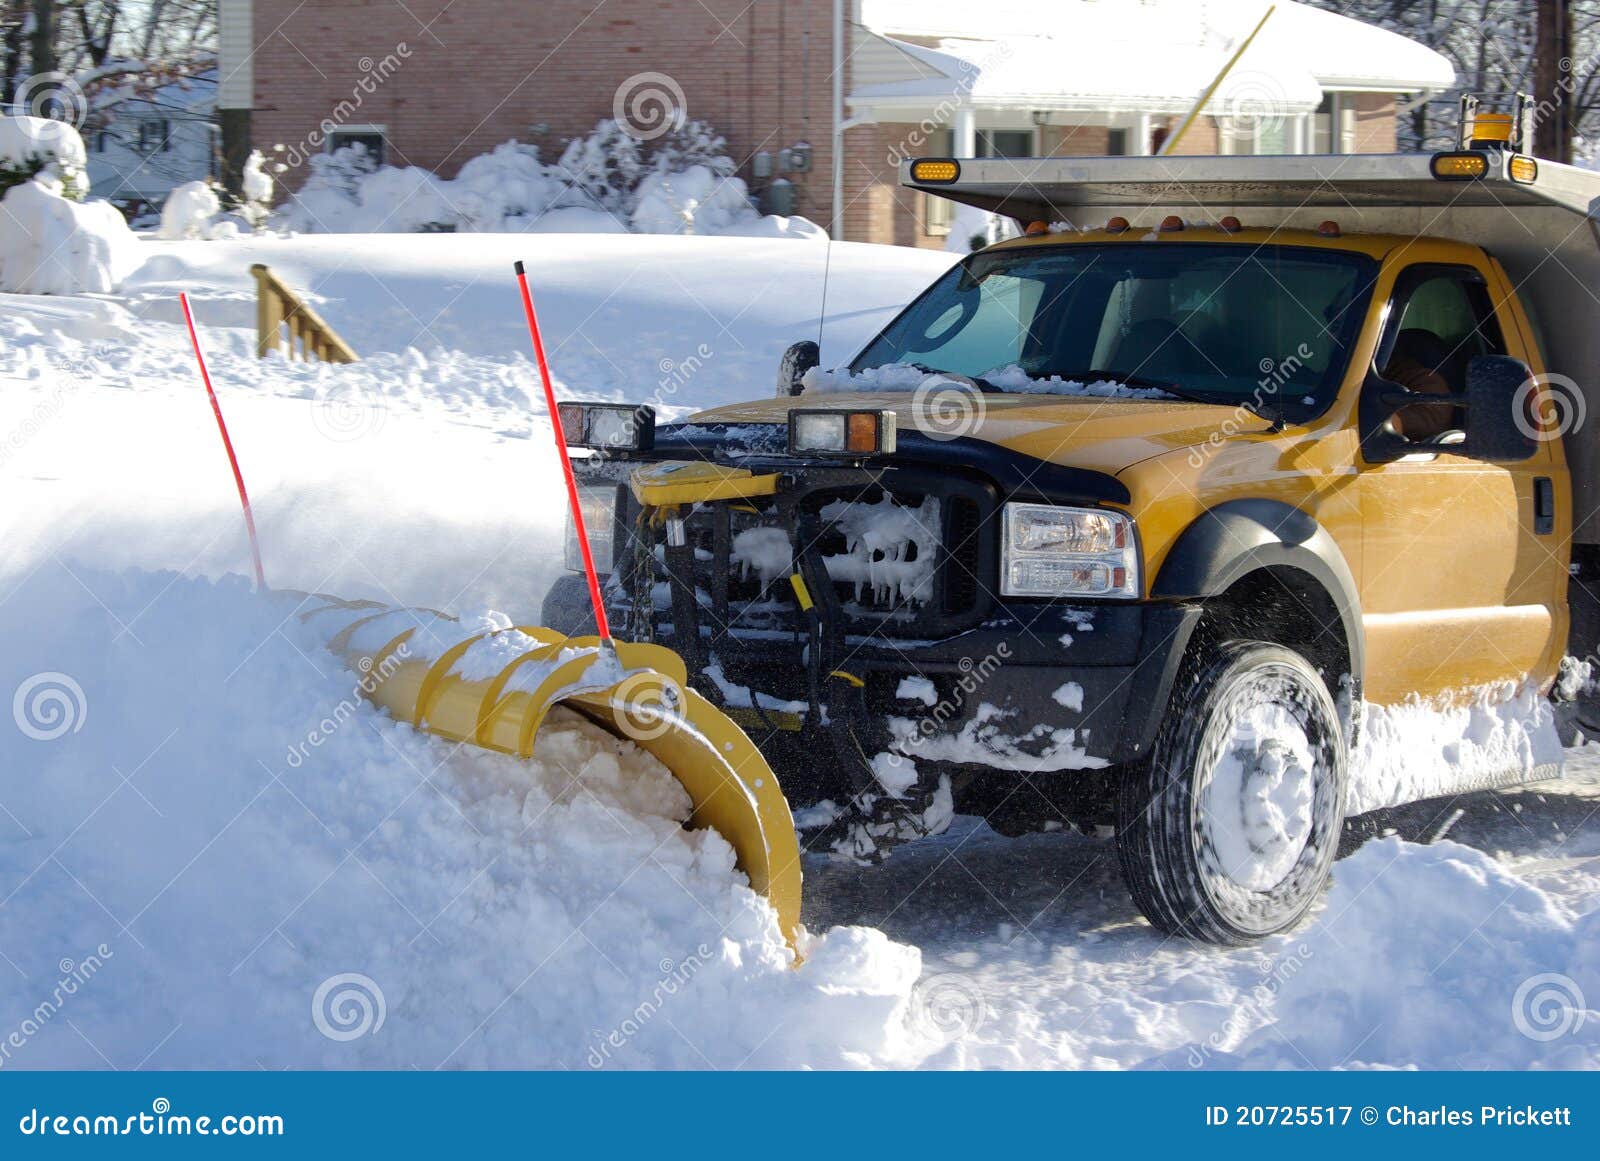 the snow plow